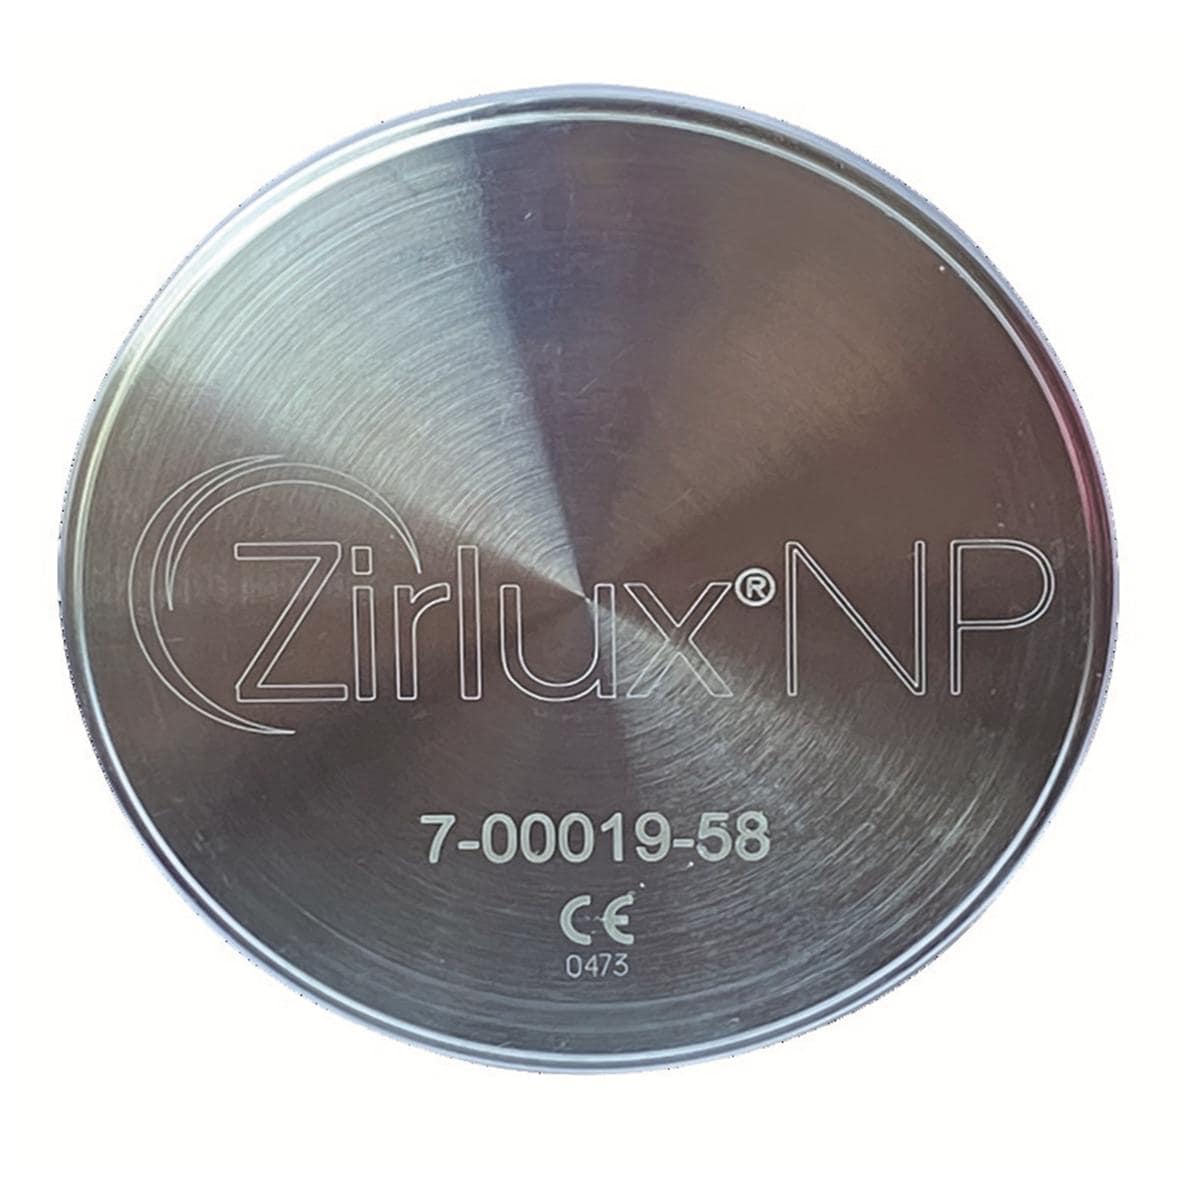 Disque de Cobalt Chrome ZIRLUX NP - 13,5 mm